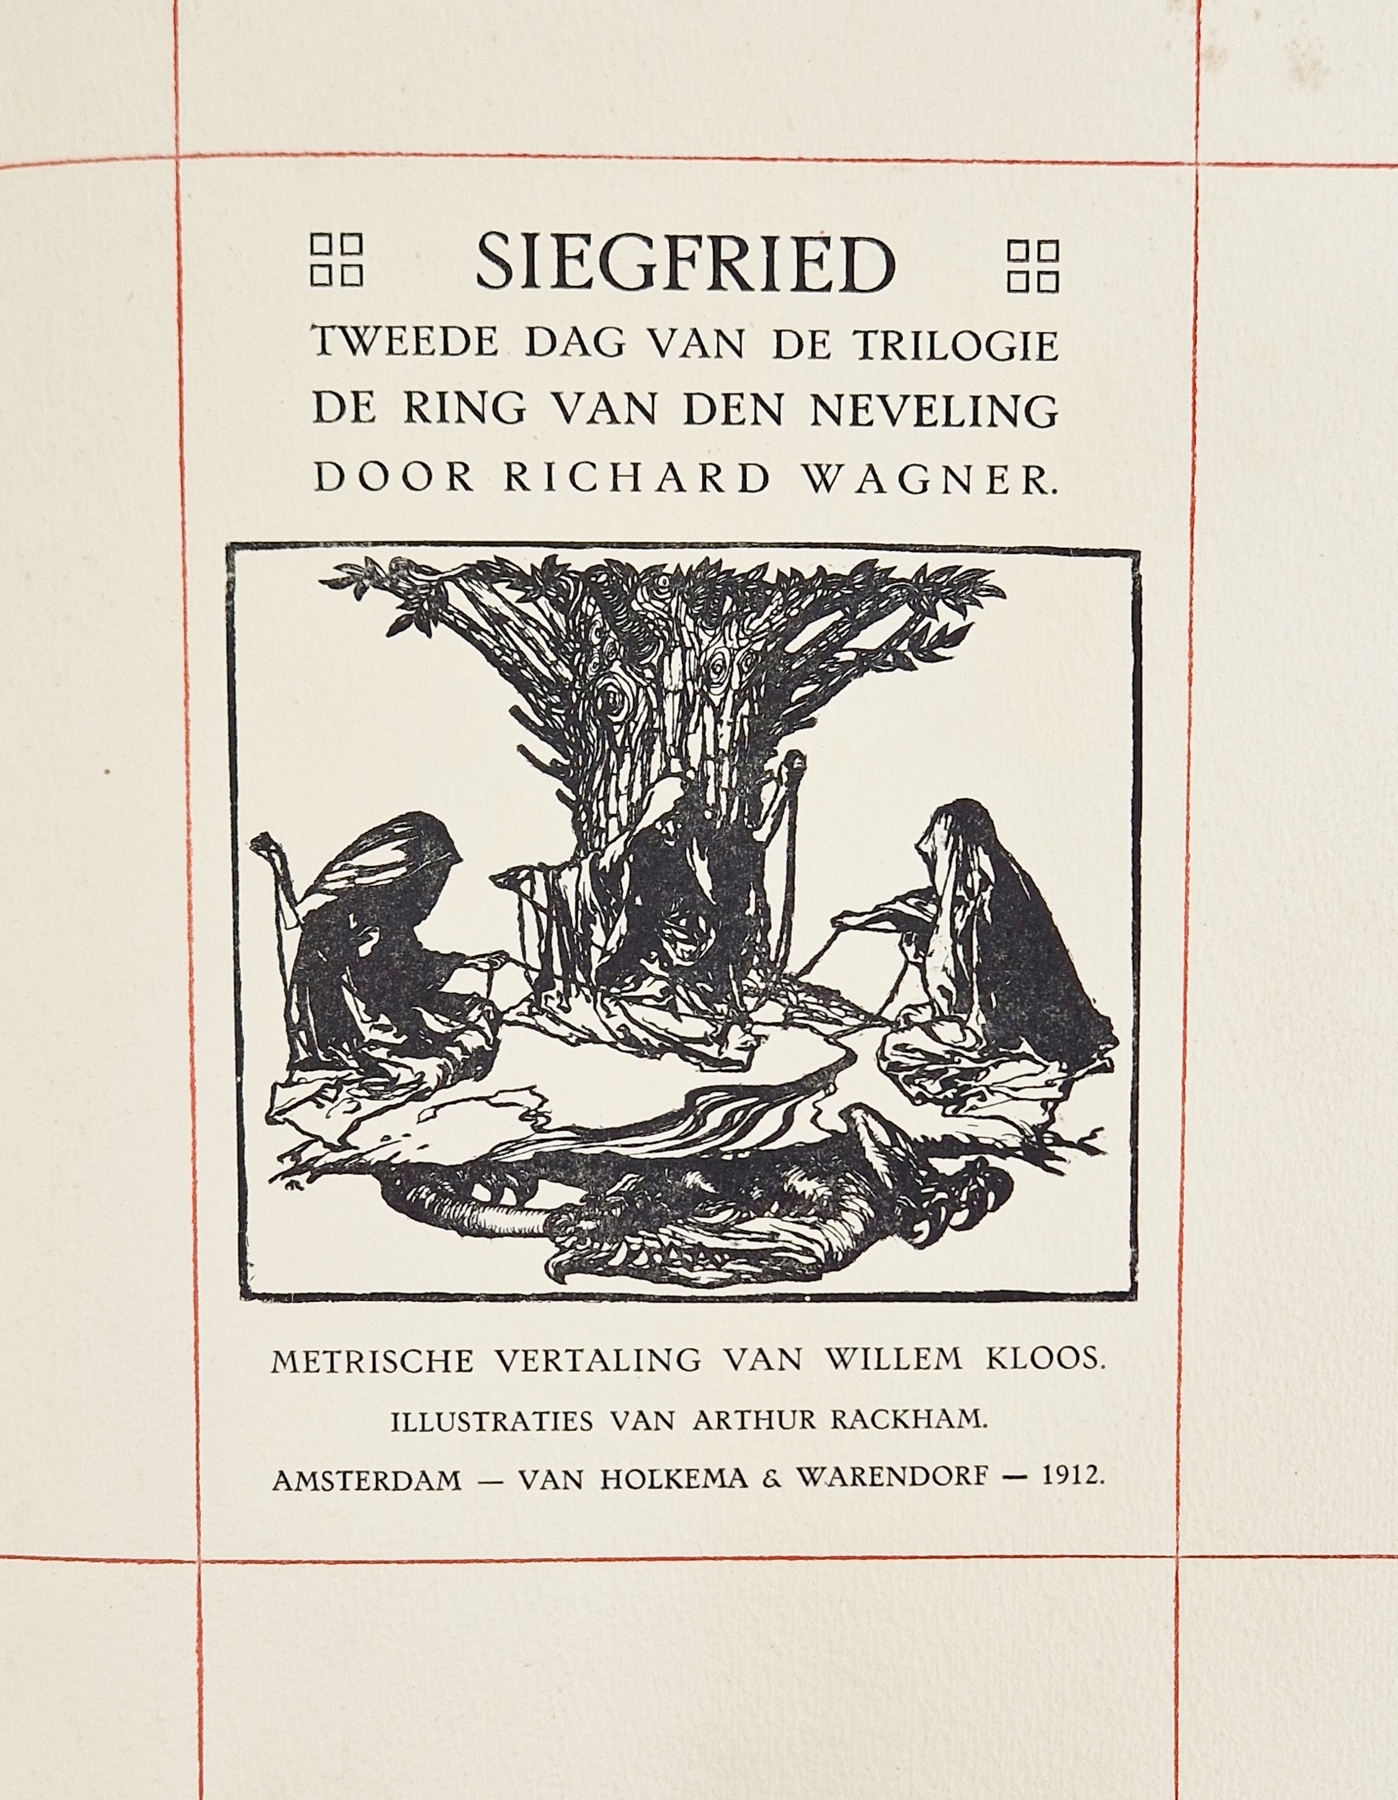 Rackham, Arthur (ills.) Kloos, Willem , Wagner. Richard "Godenschemering" no 103, "Siegfried", no. - Image 4 of 8